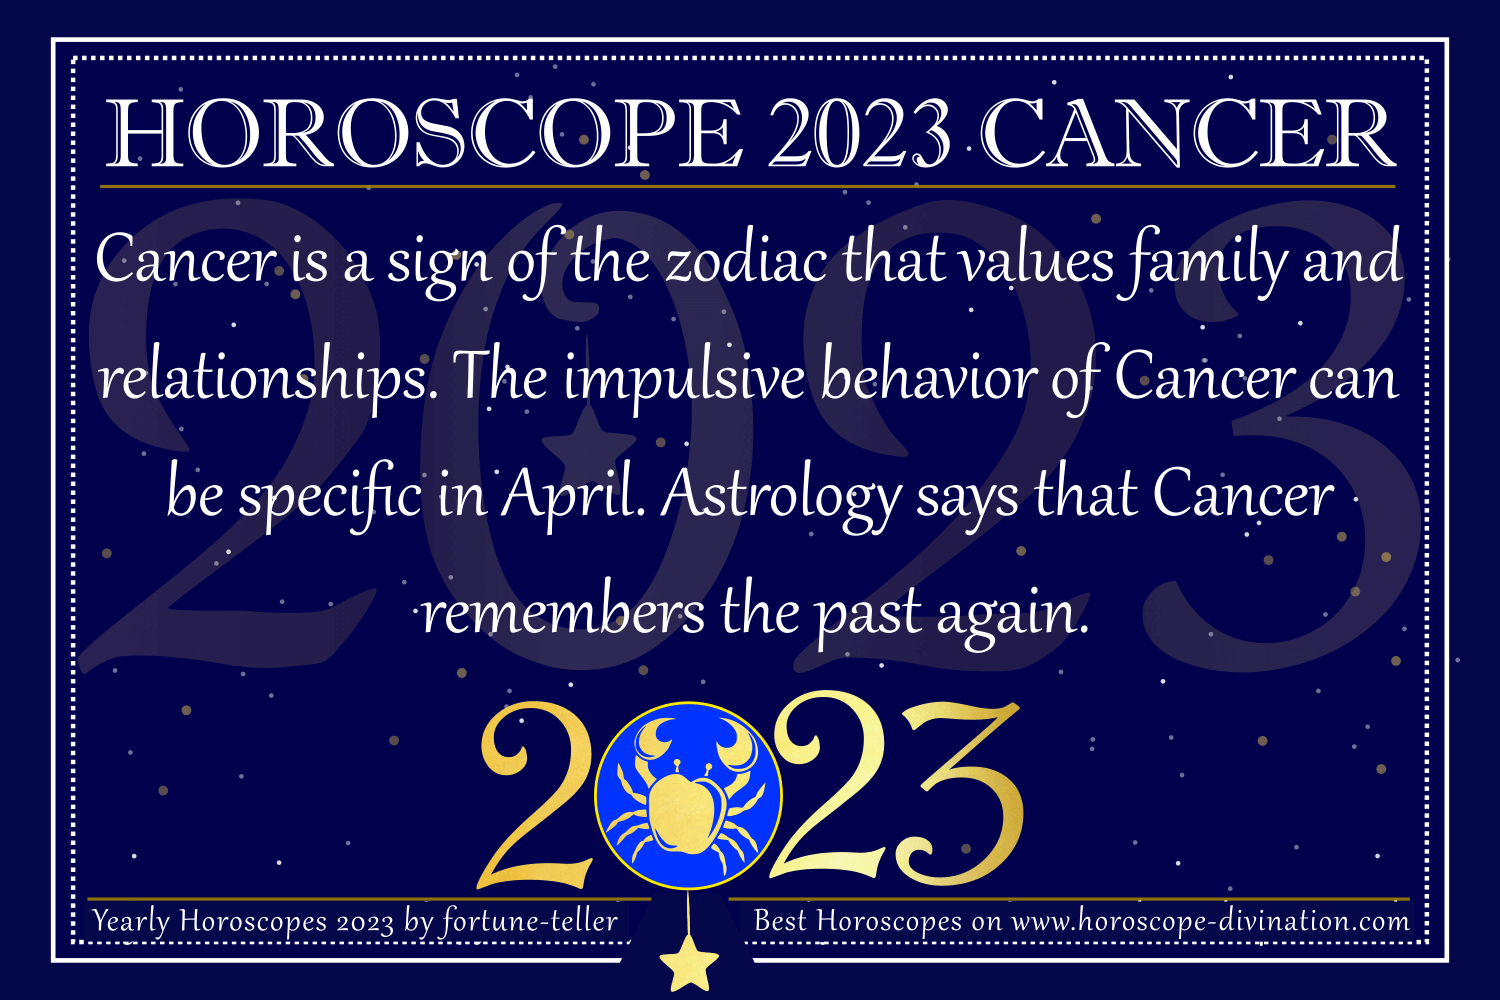 Horoscope2023cancer 